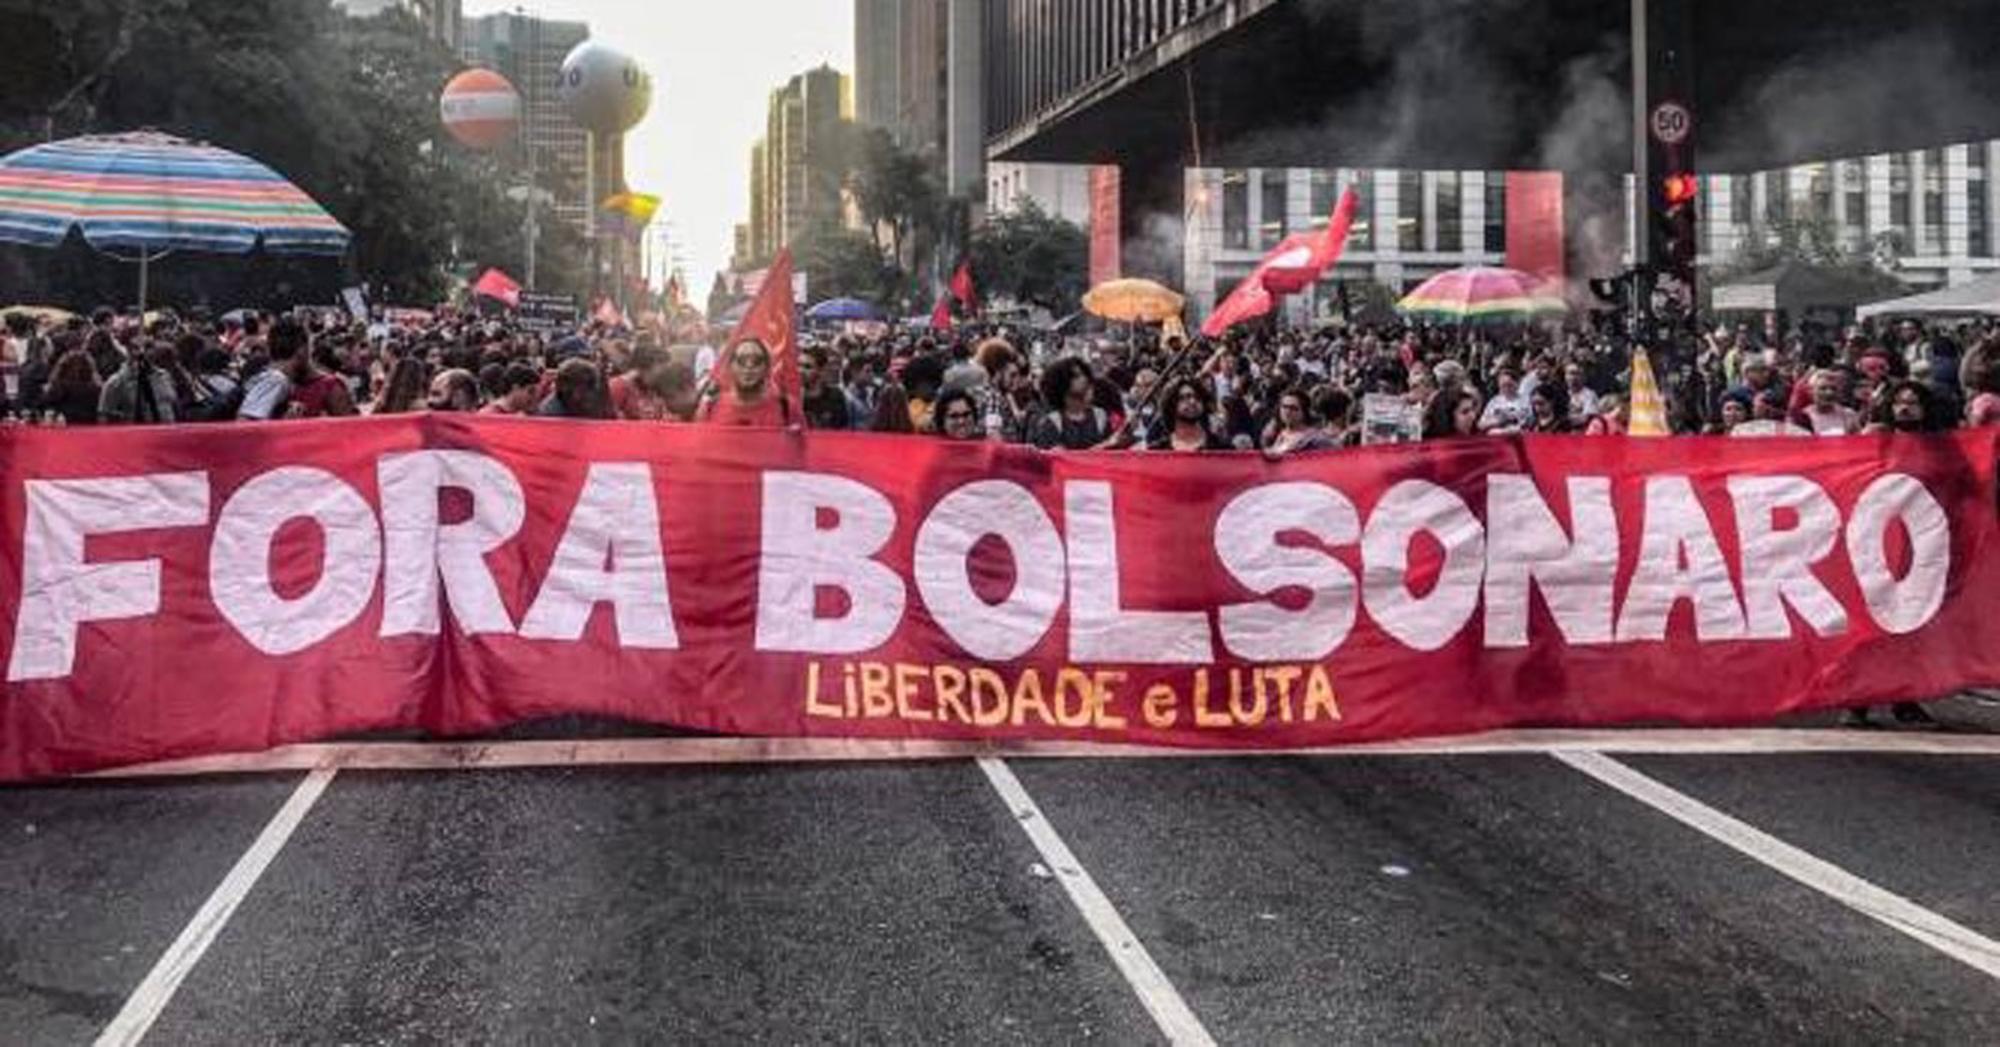 Fuera Bolsonaro